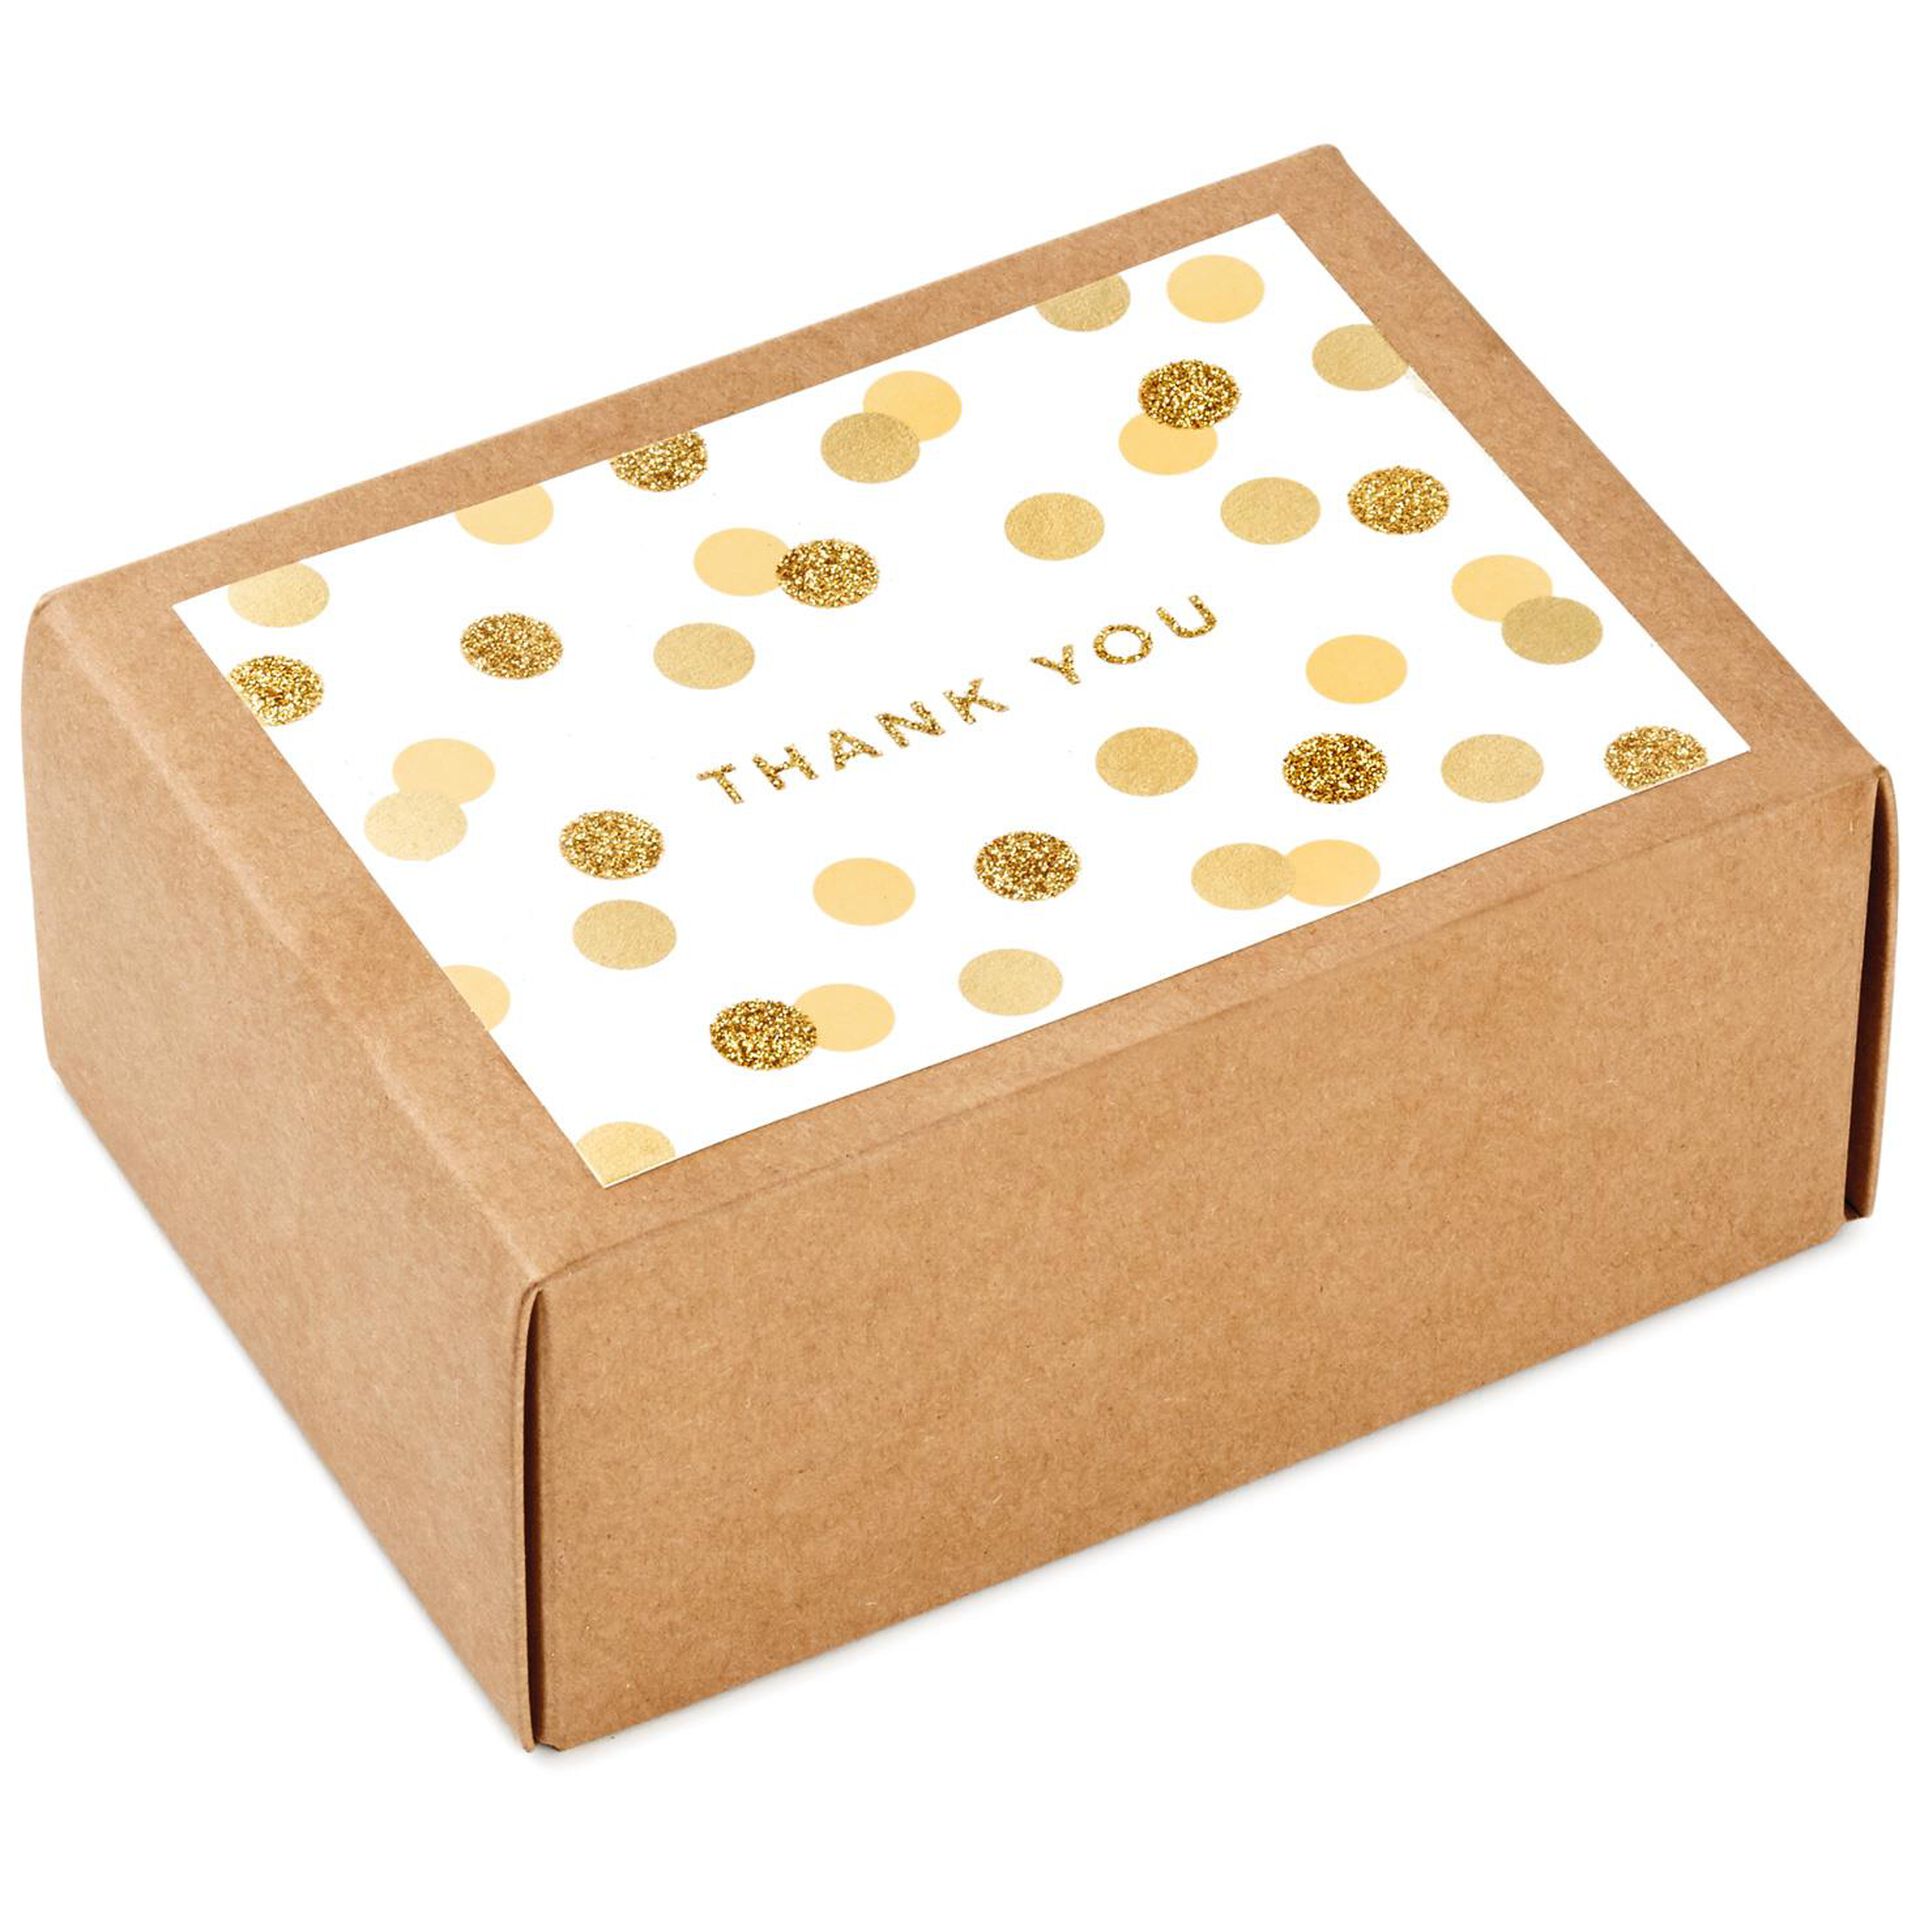 Sold manufacturers direct custom pattern carton thank you box custom